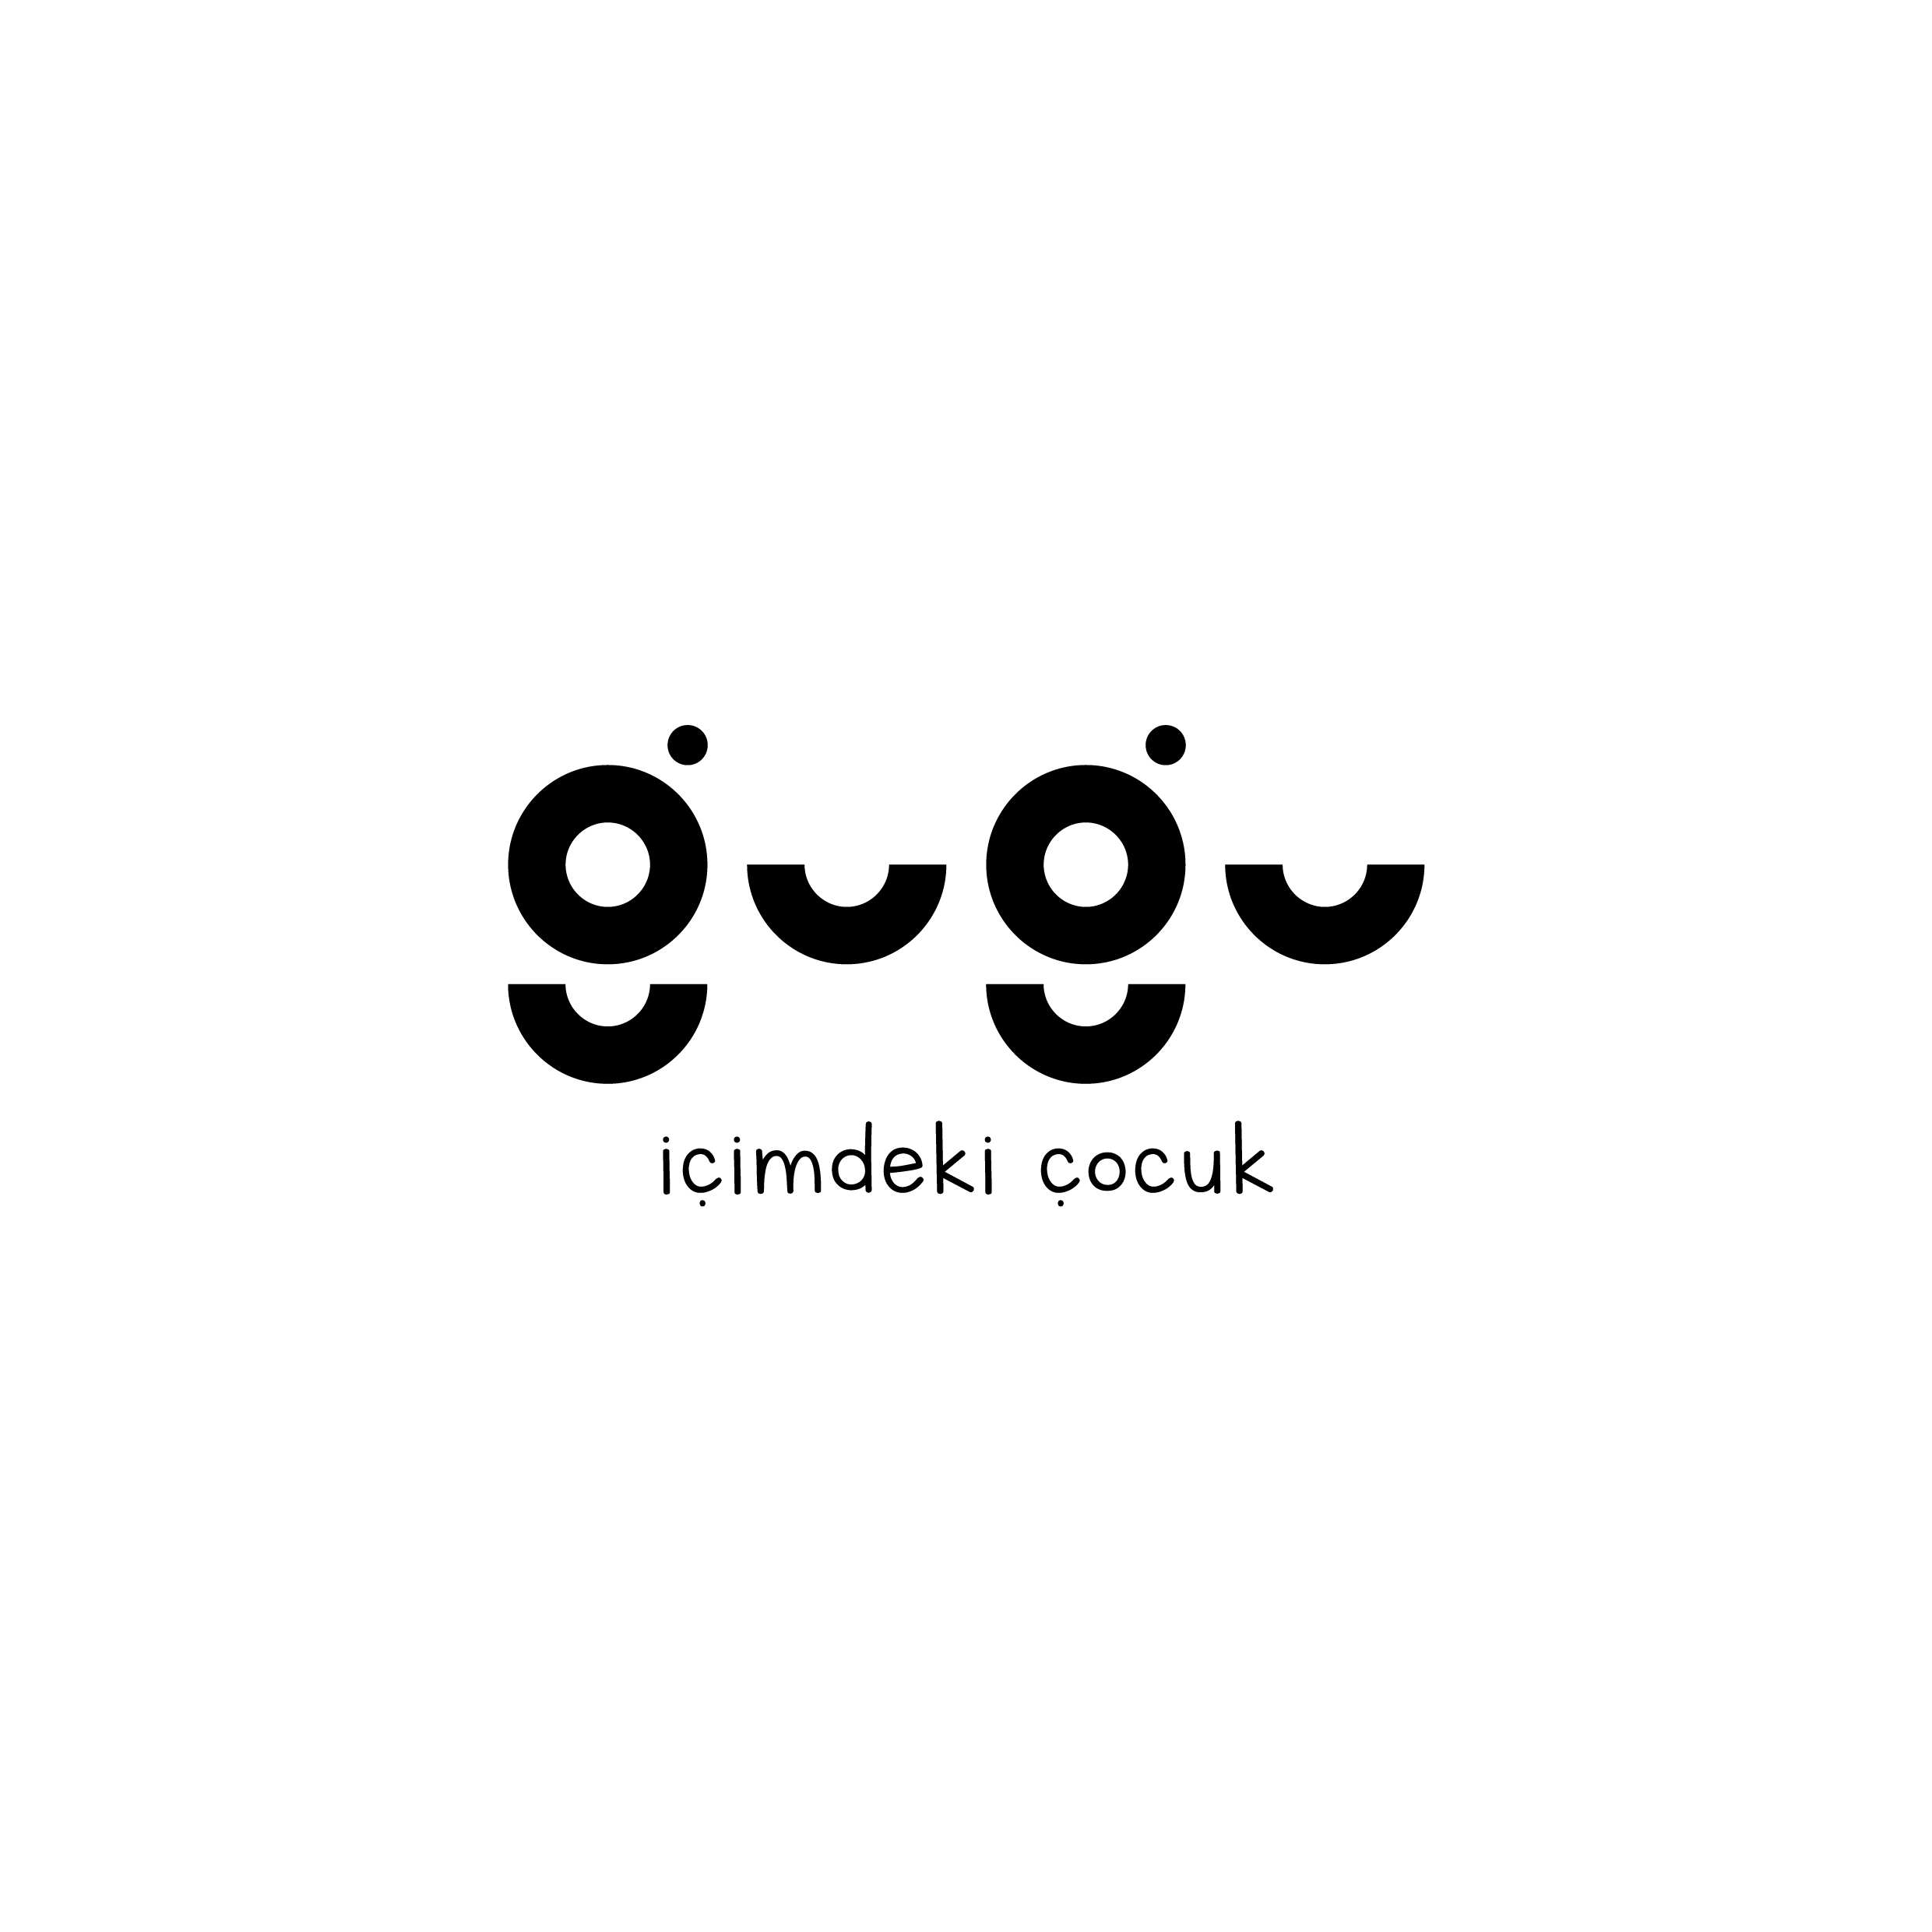 gugu_logo_gmk-02